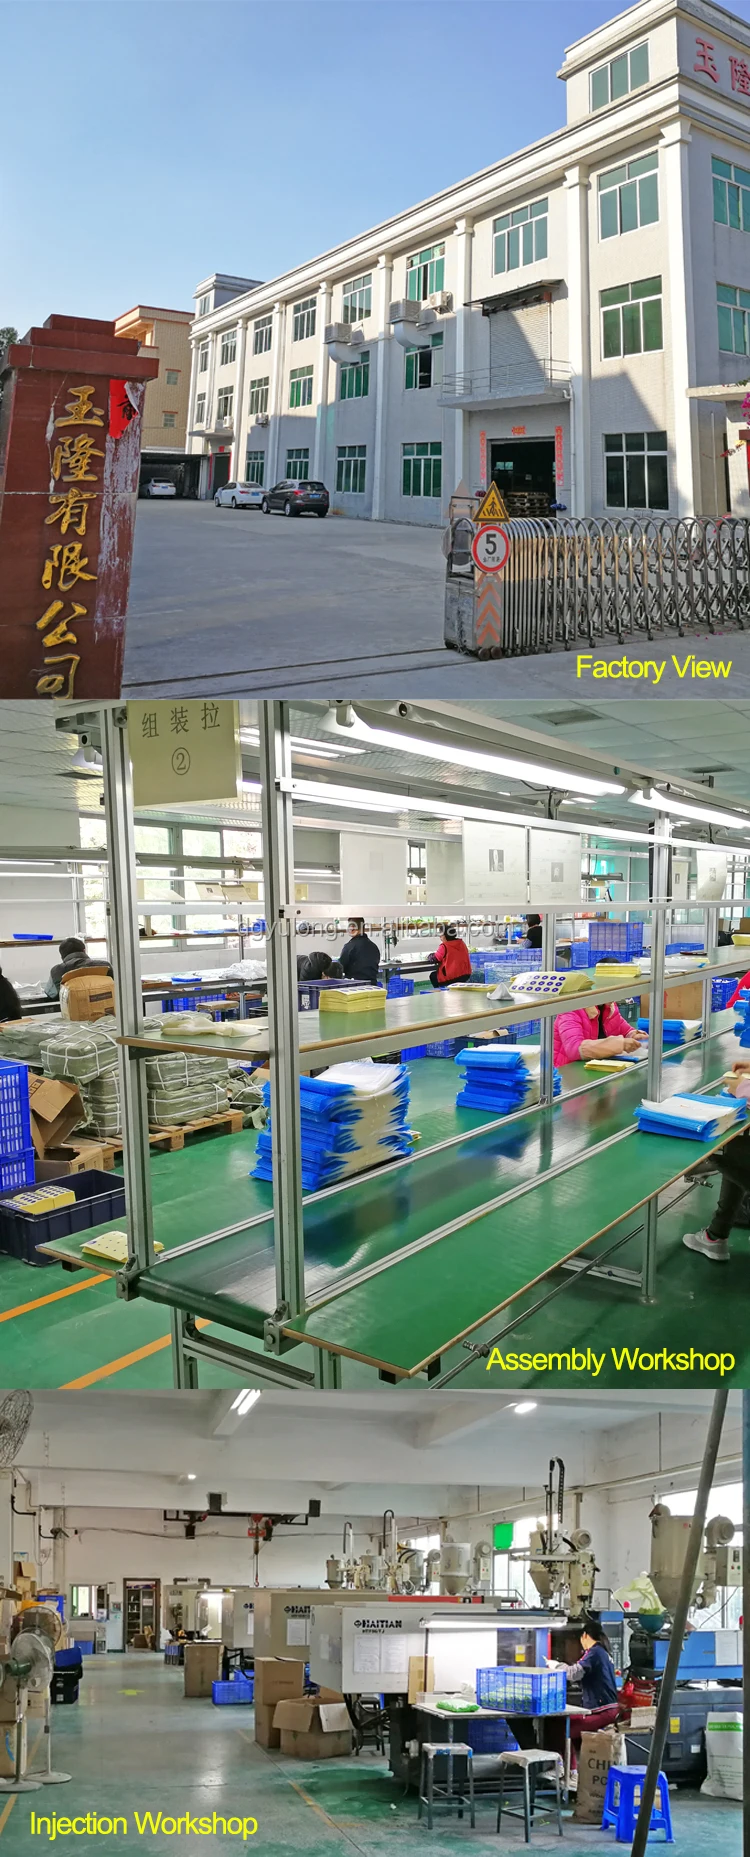 factorys yulong